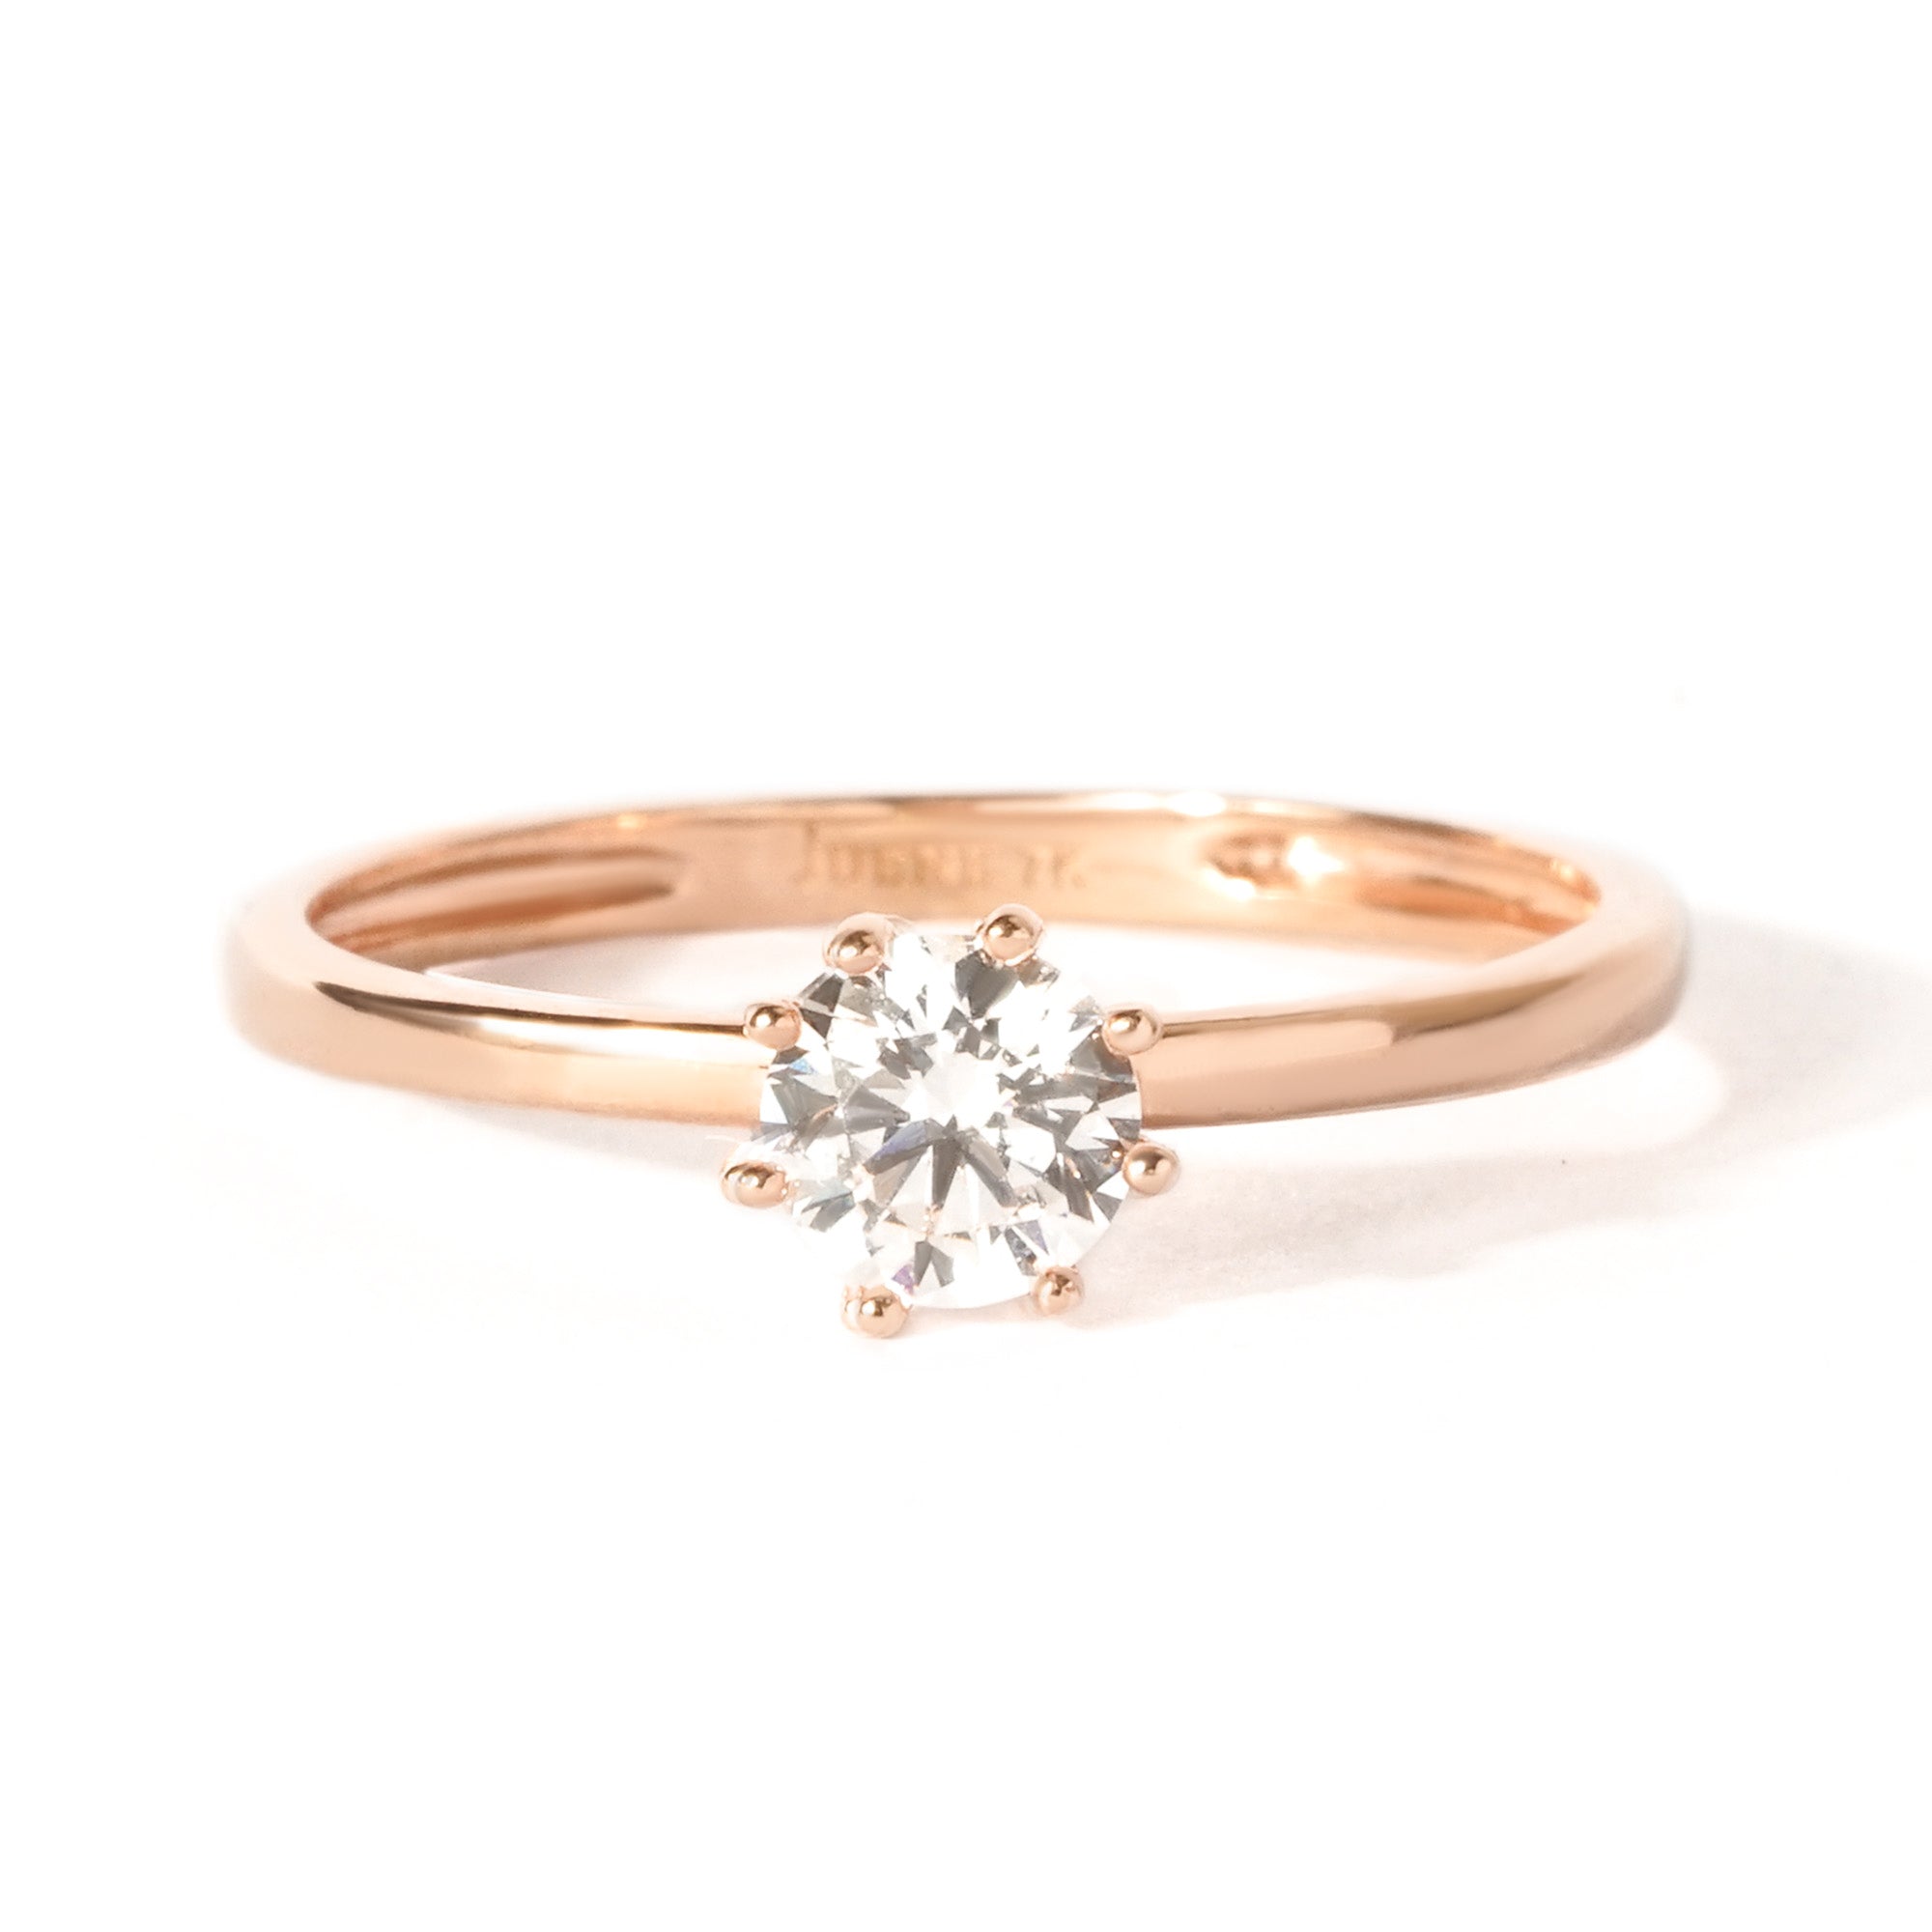 Clara Gold Ring - WS 02 Seasons - Juene Jewelry